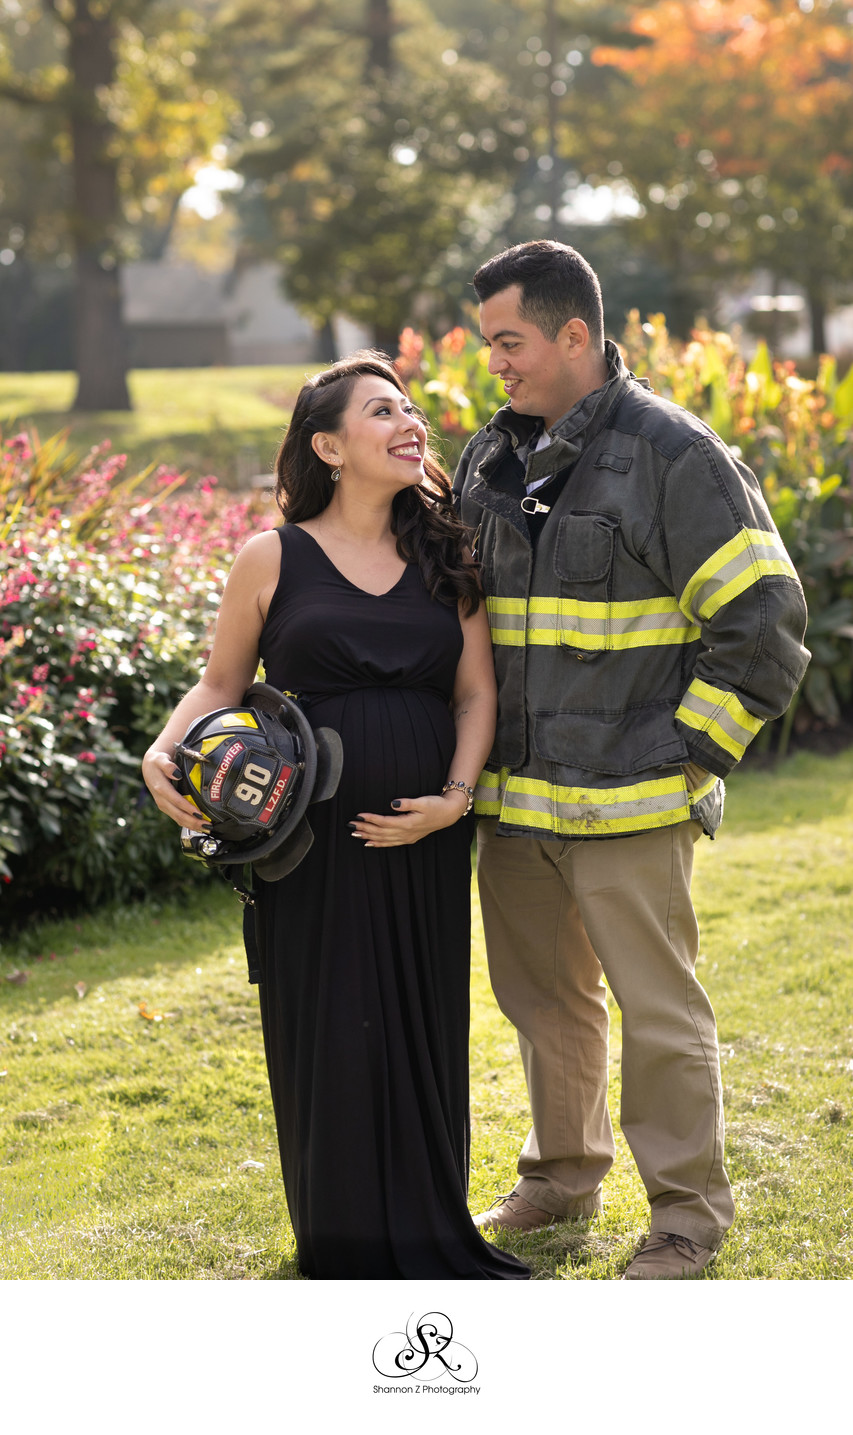 Firefighter Maternity: Golden Hour Portraits